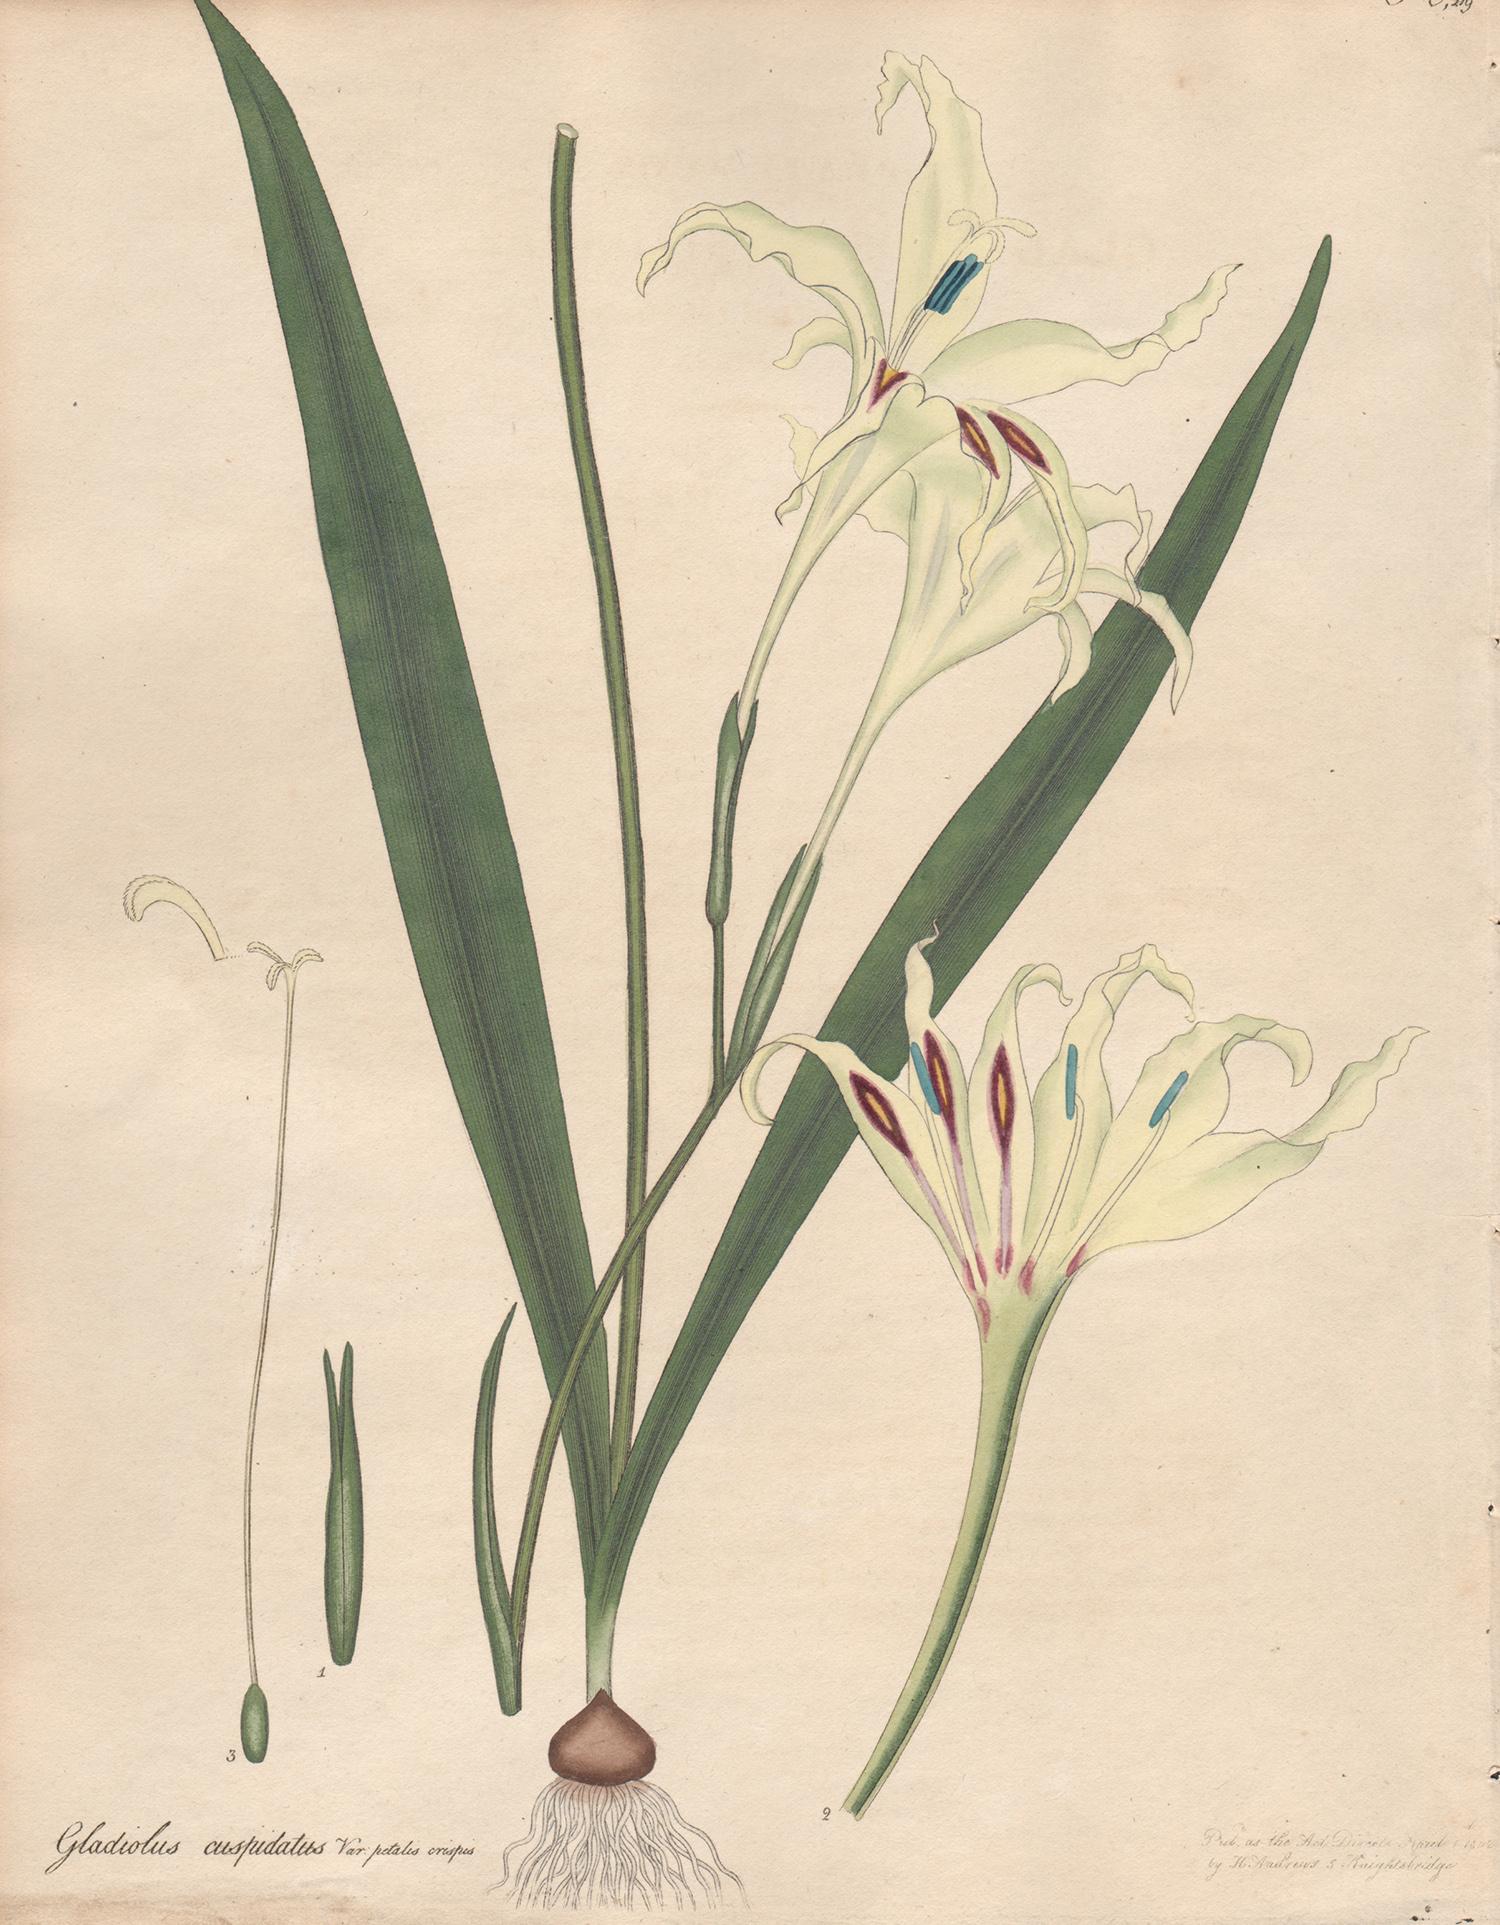 Henry C Andrews Still-Life Print - Gladiolus Cuspidatus - English Henry Andrews botanical flower engraving, c1800